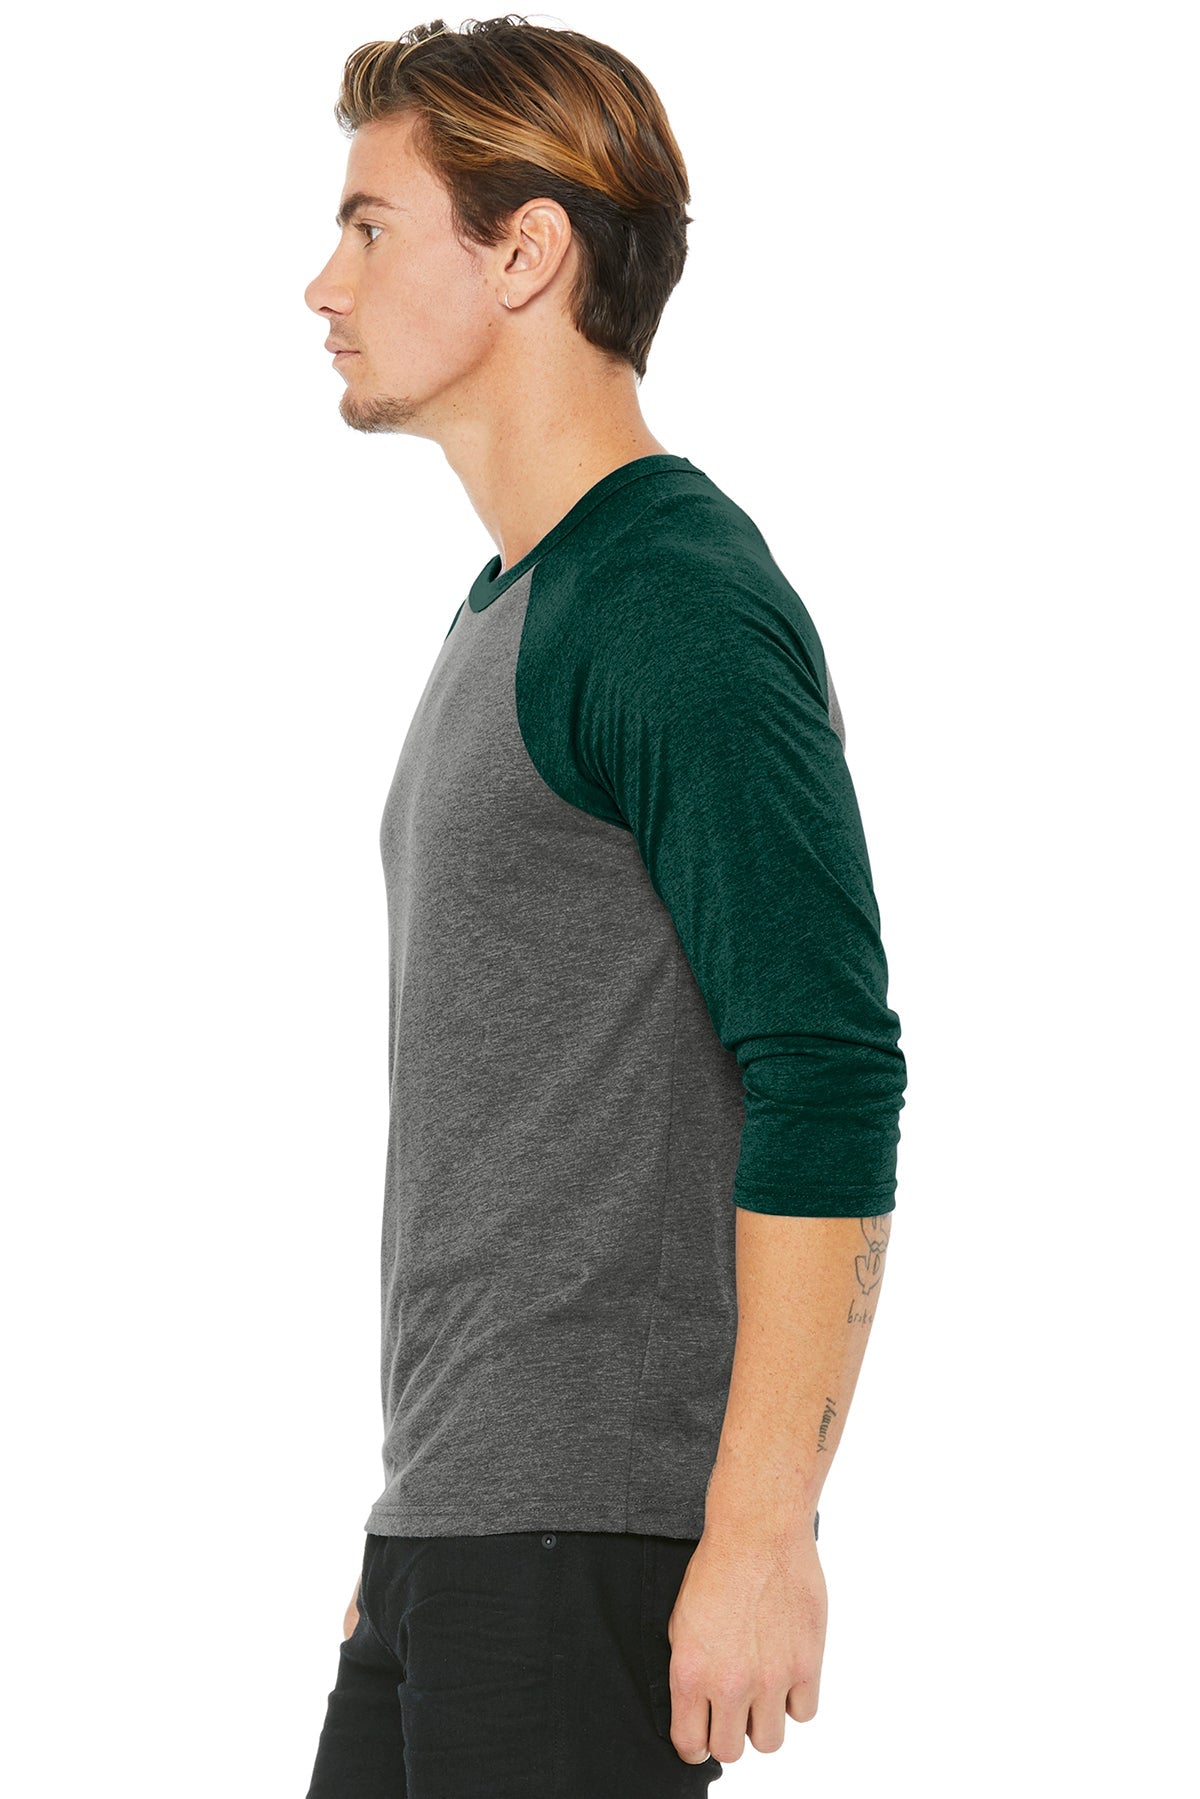 Bella Canvas Unisex 3/4-Sleeve Baseball T-Shirt, Grey/ Emerald